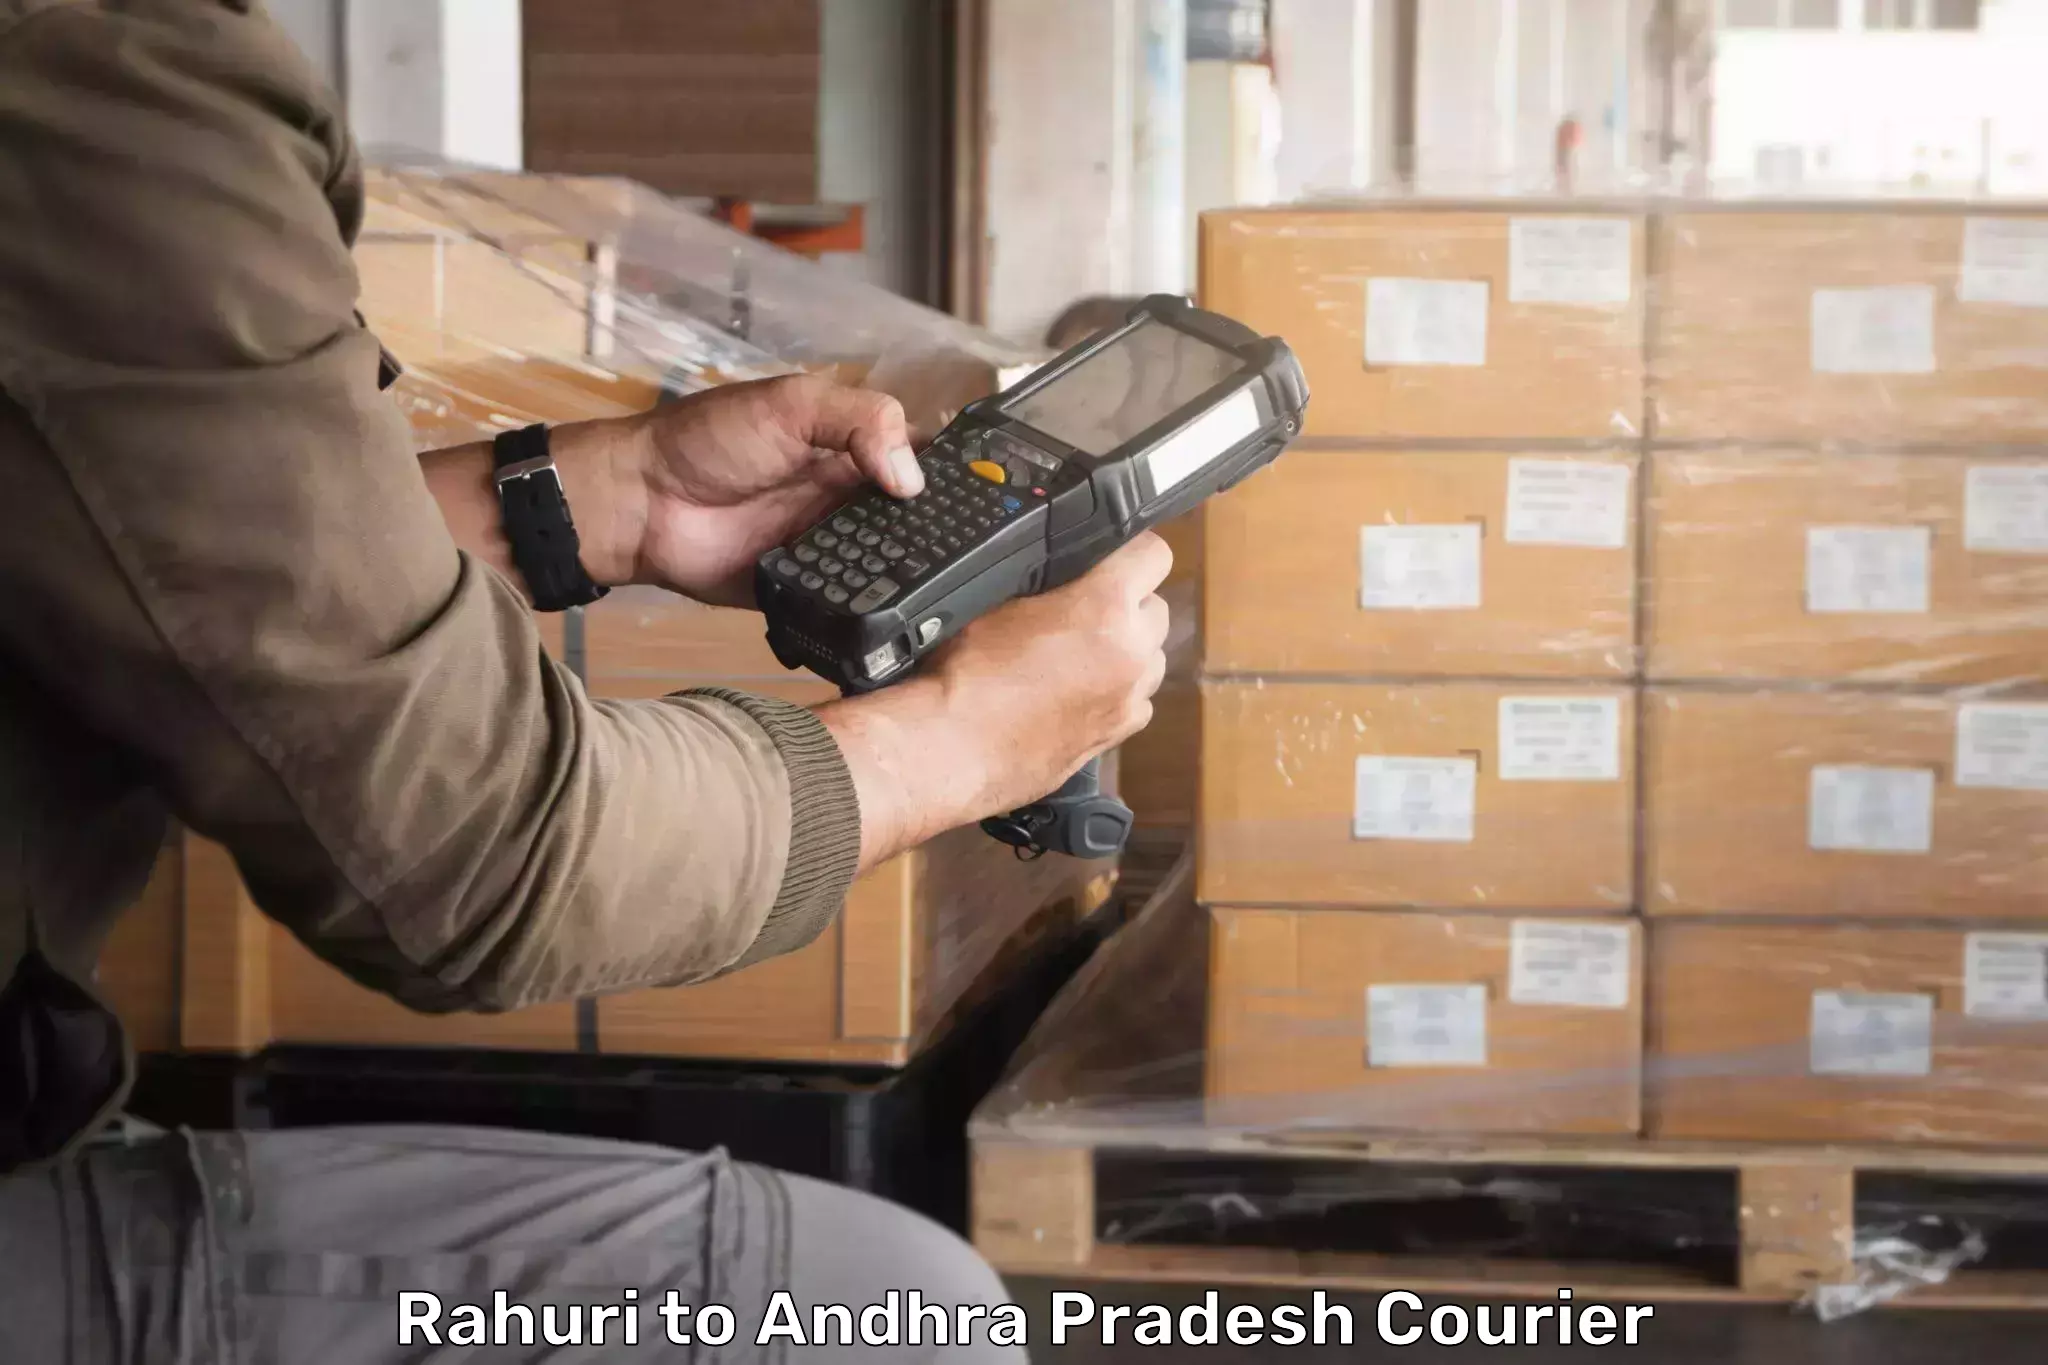 Nationwide delivery network Rahuri to Pamuru